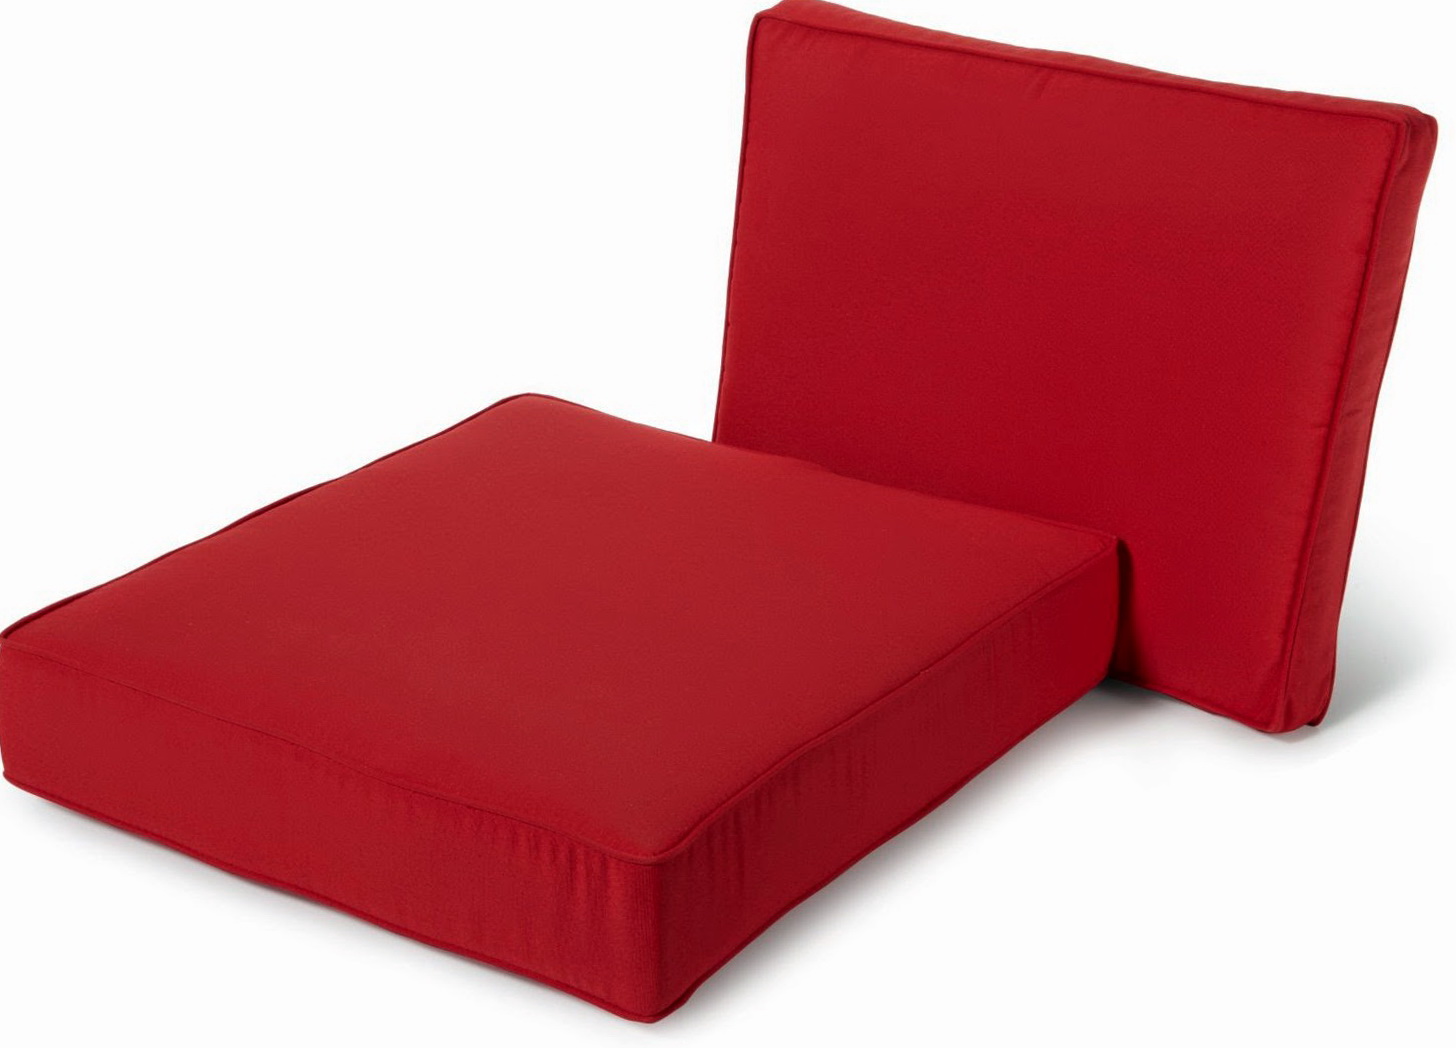 Outdoor Deep Seat Cushions 24×24 | Home Design Ideas